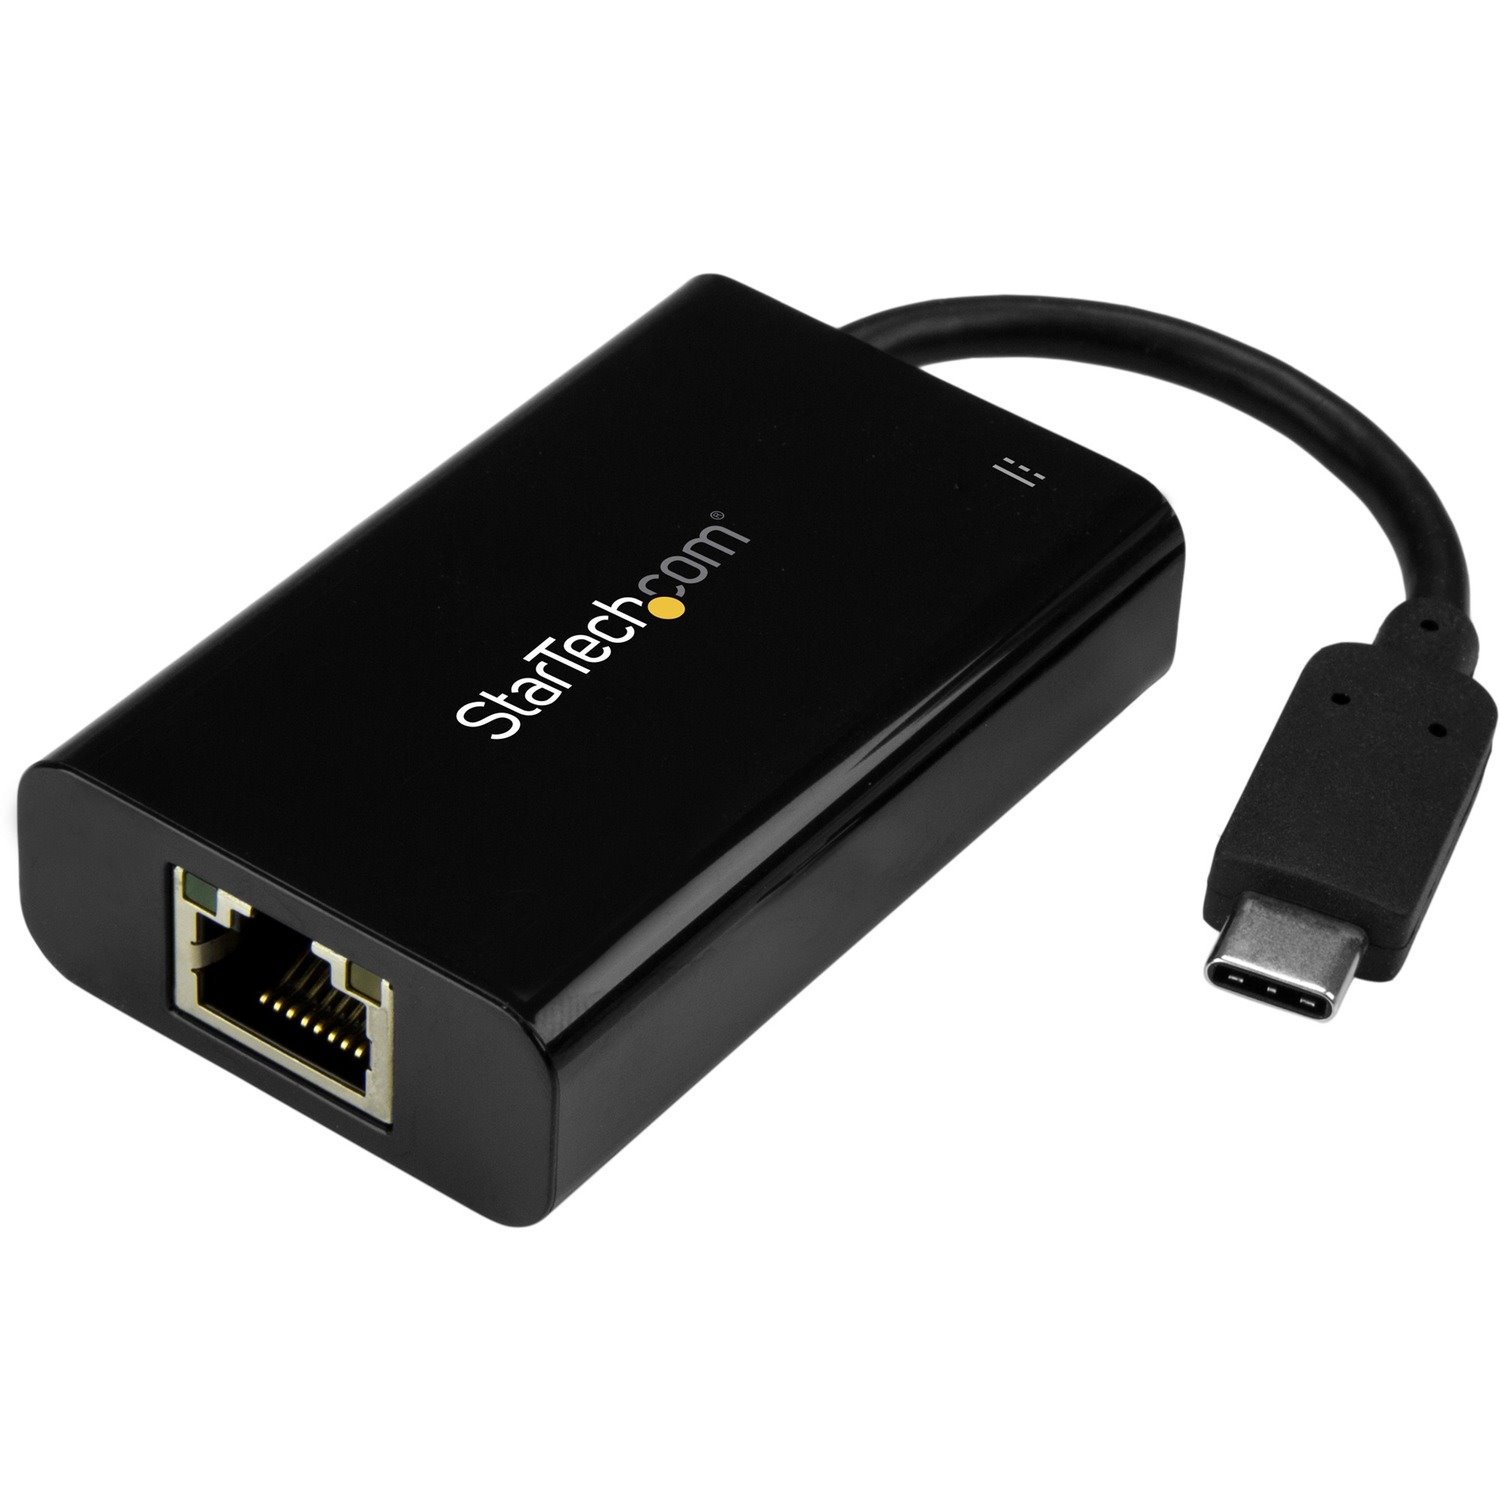 StarTech.com Gigabit Ethernet Card for Notebook - 10/100/1000Base-T - Portable